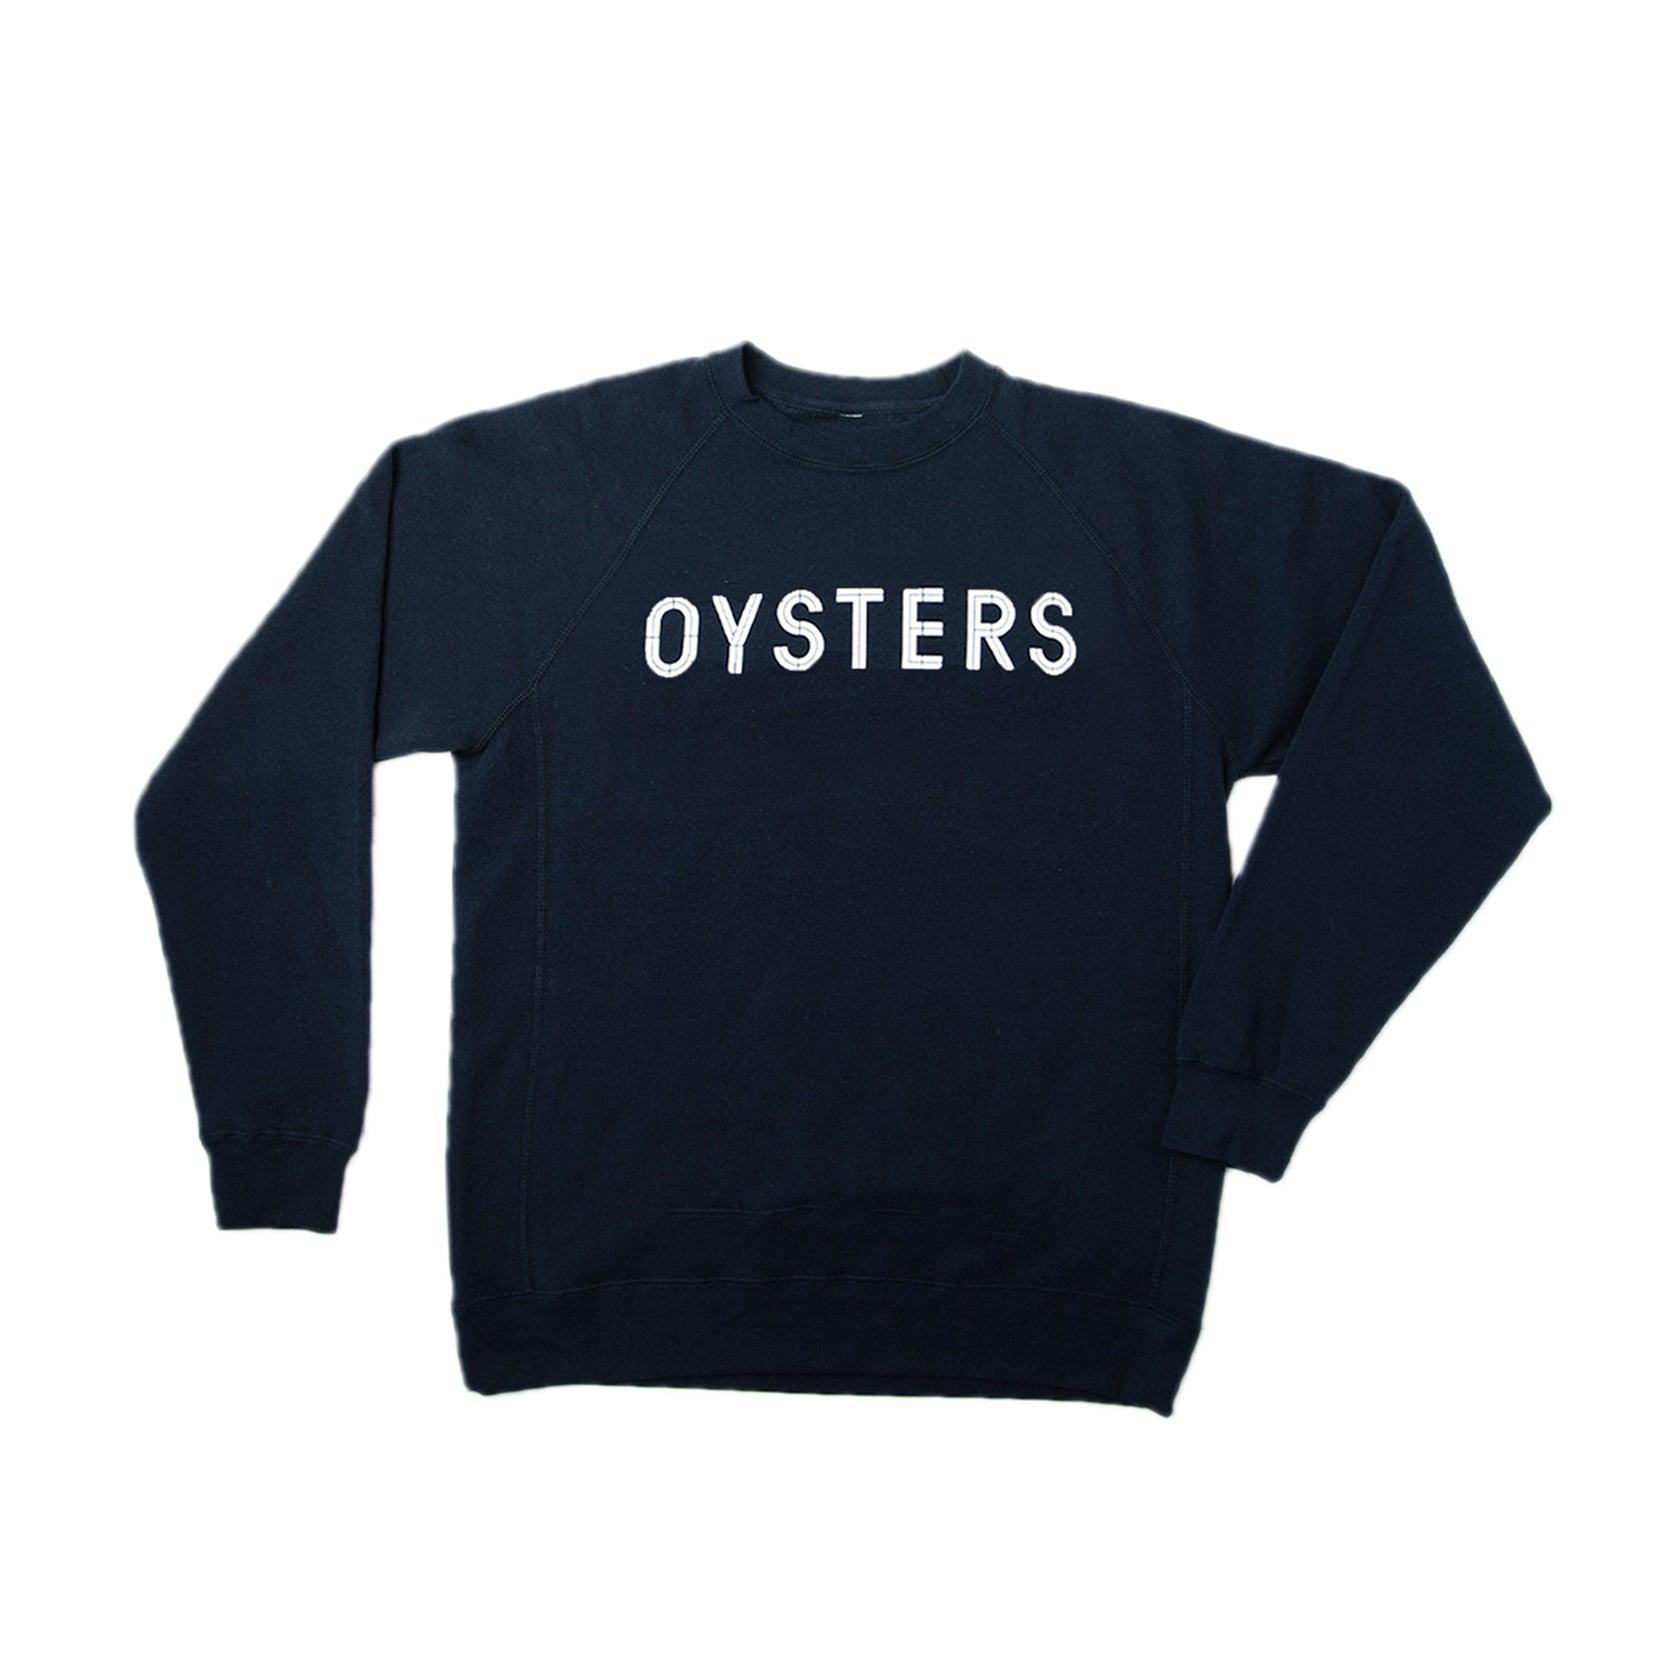 Oysters Navy Crewneck Sweatshirt